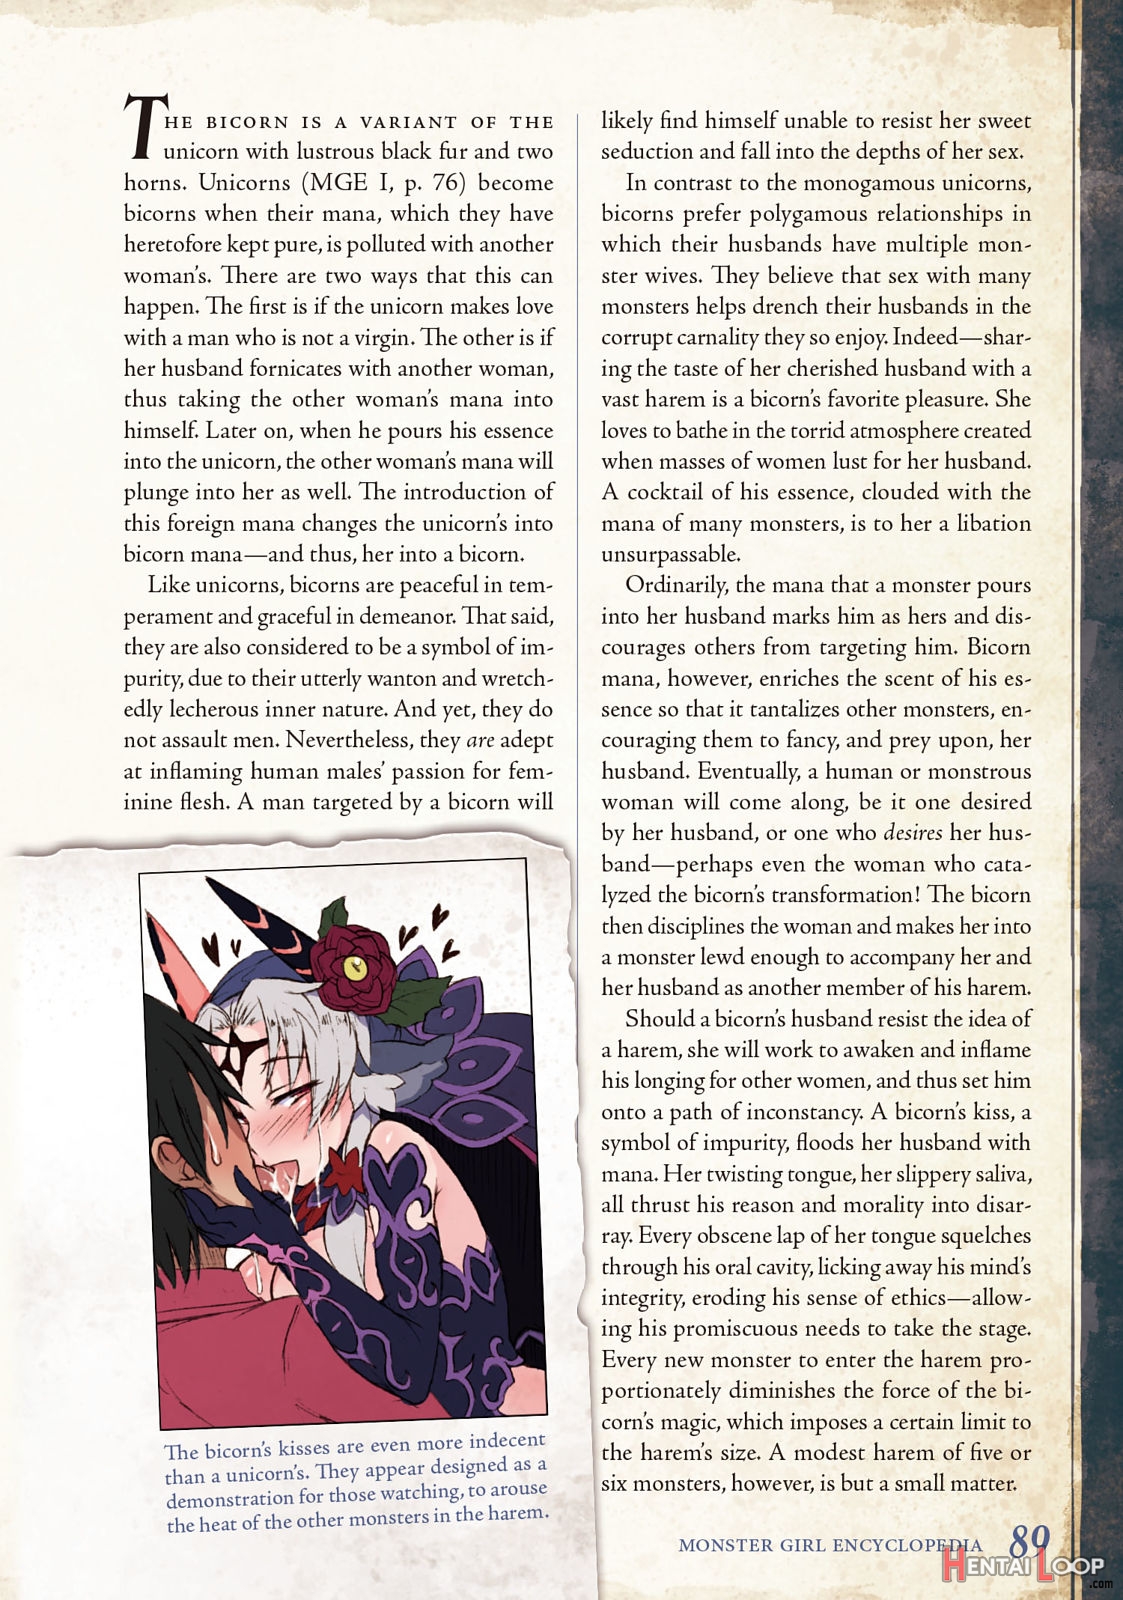 Monster Girl Encyclopedia Vol. 2 page 90